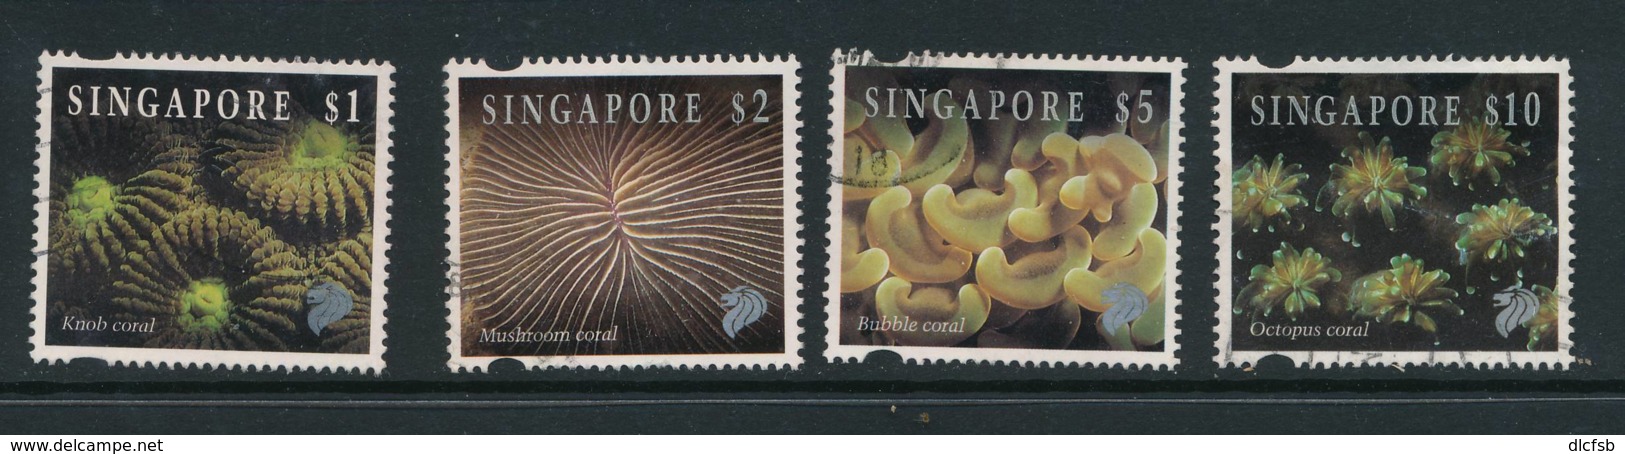 SINGAPORE, 1994 Marine Life $1, $2, $5, $10 Fine Used, Cat £16 - Singapore (1959-...)